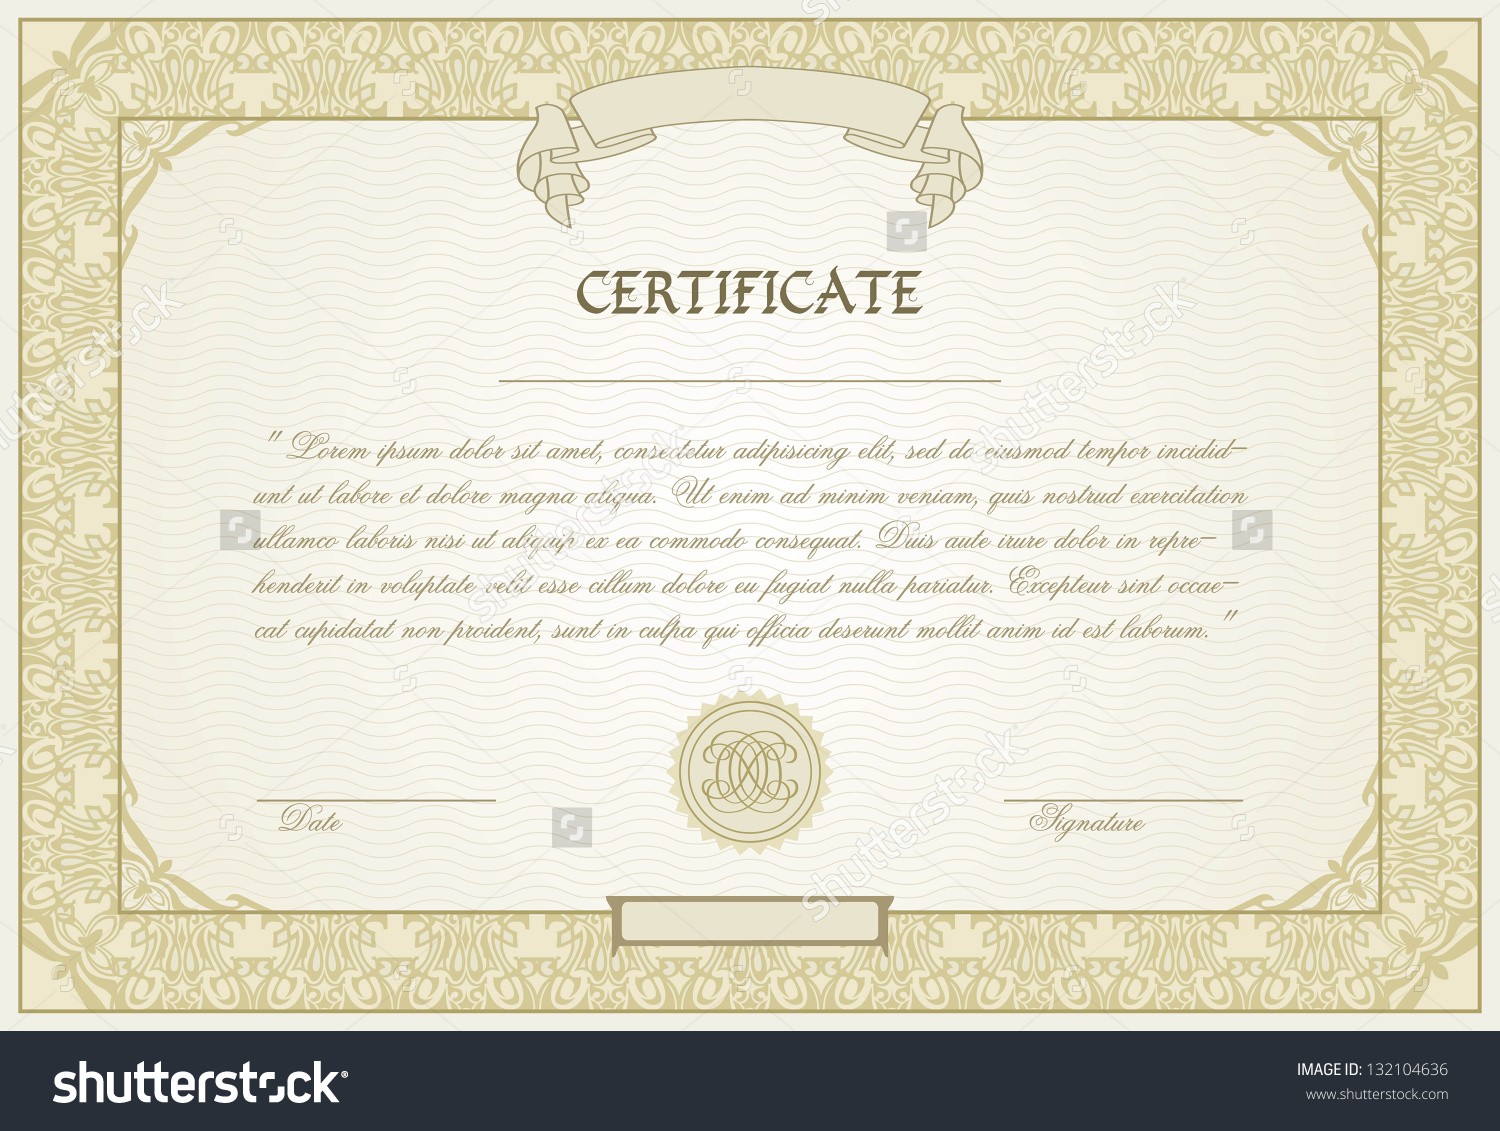 Long Service Certificate Template Sample Zrom Tk